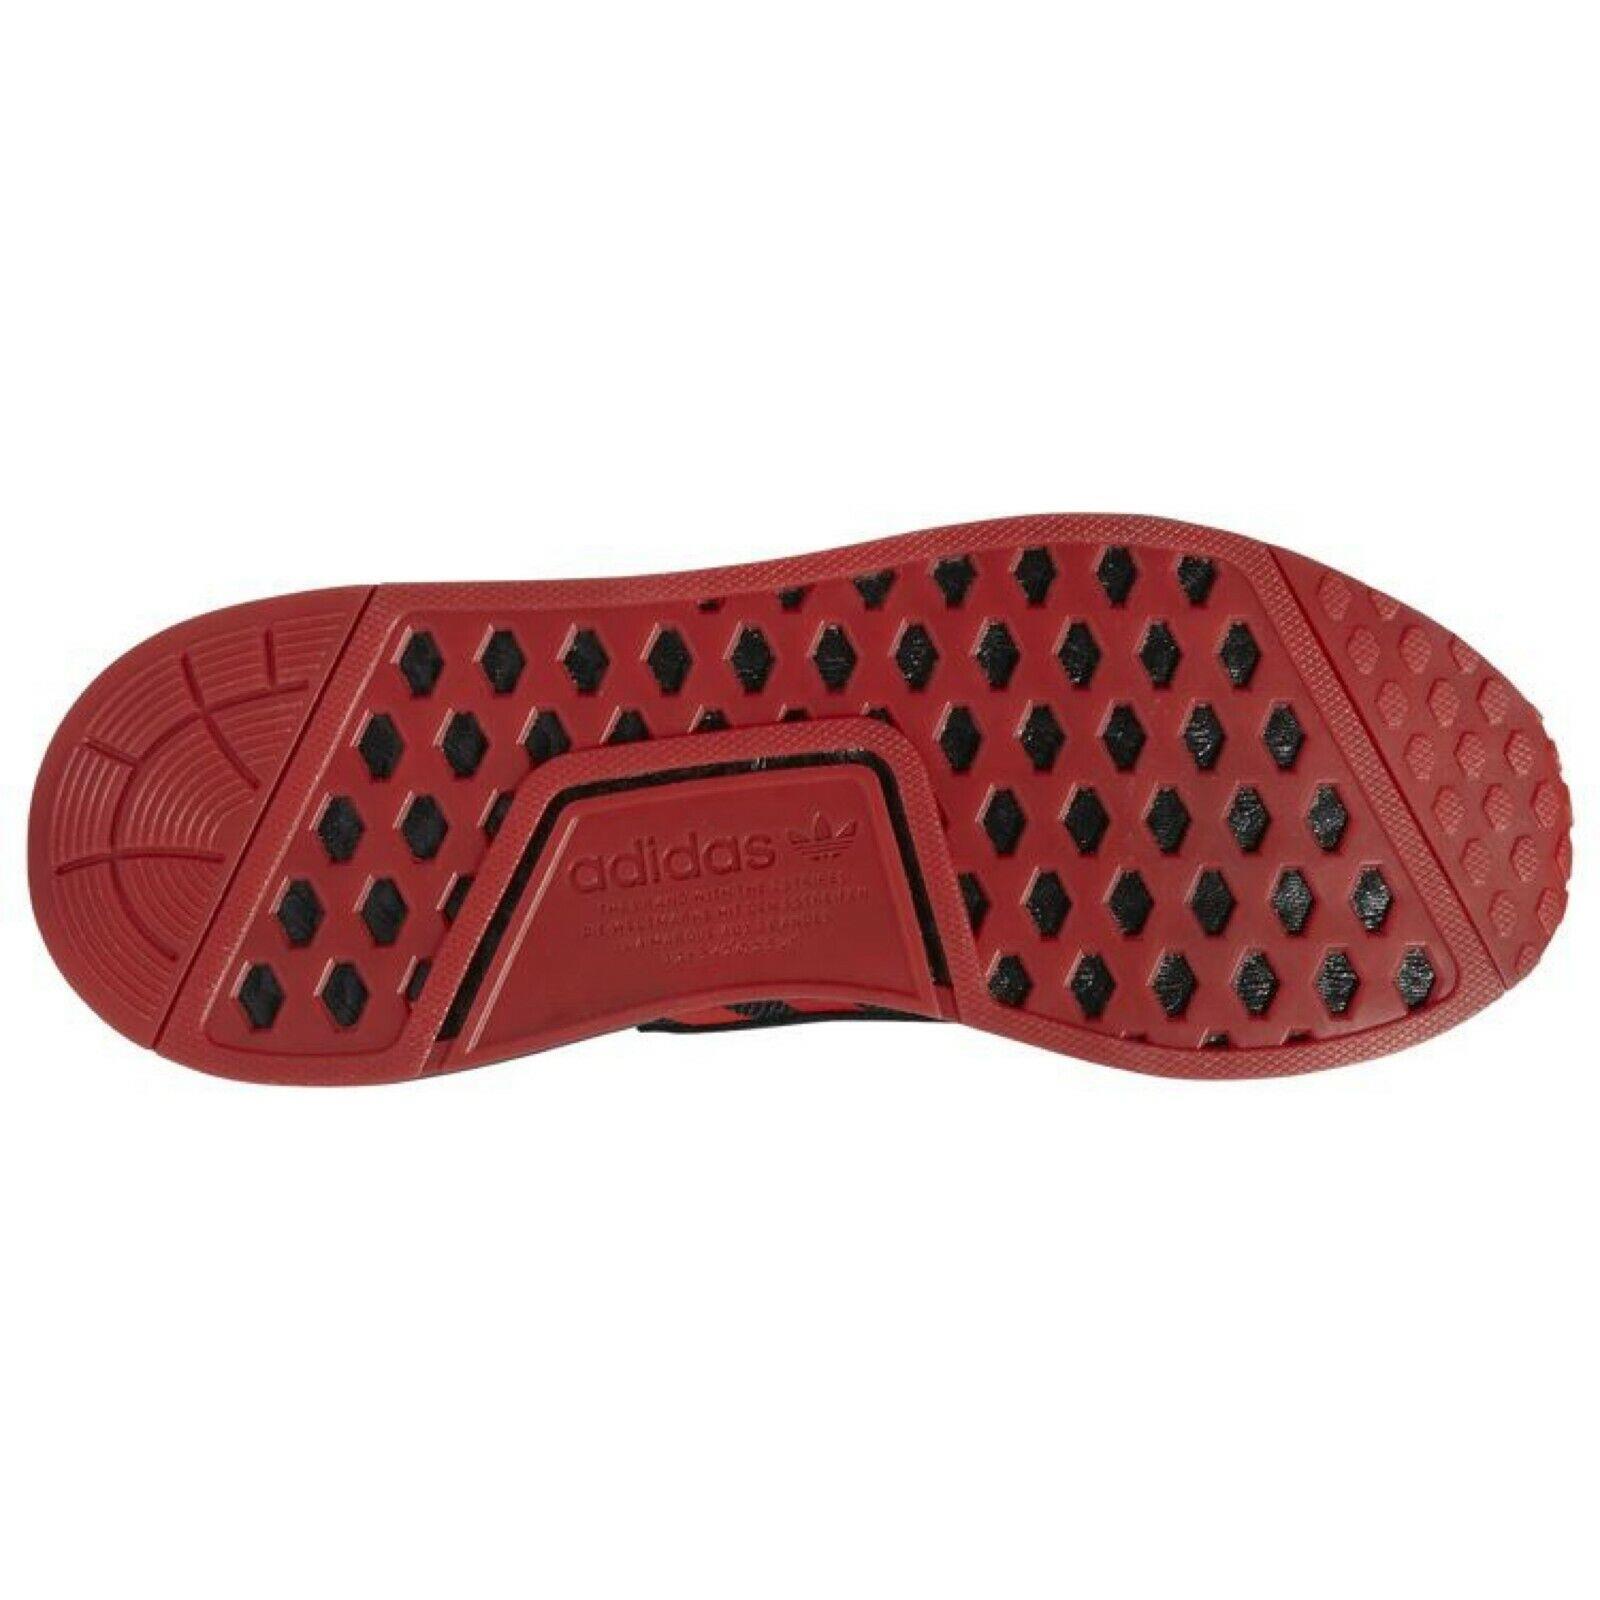 Adidas shoes Originals - Black , Black/Red Manufacturer 4